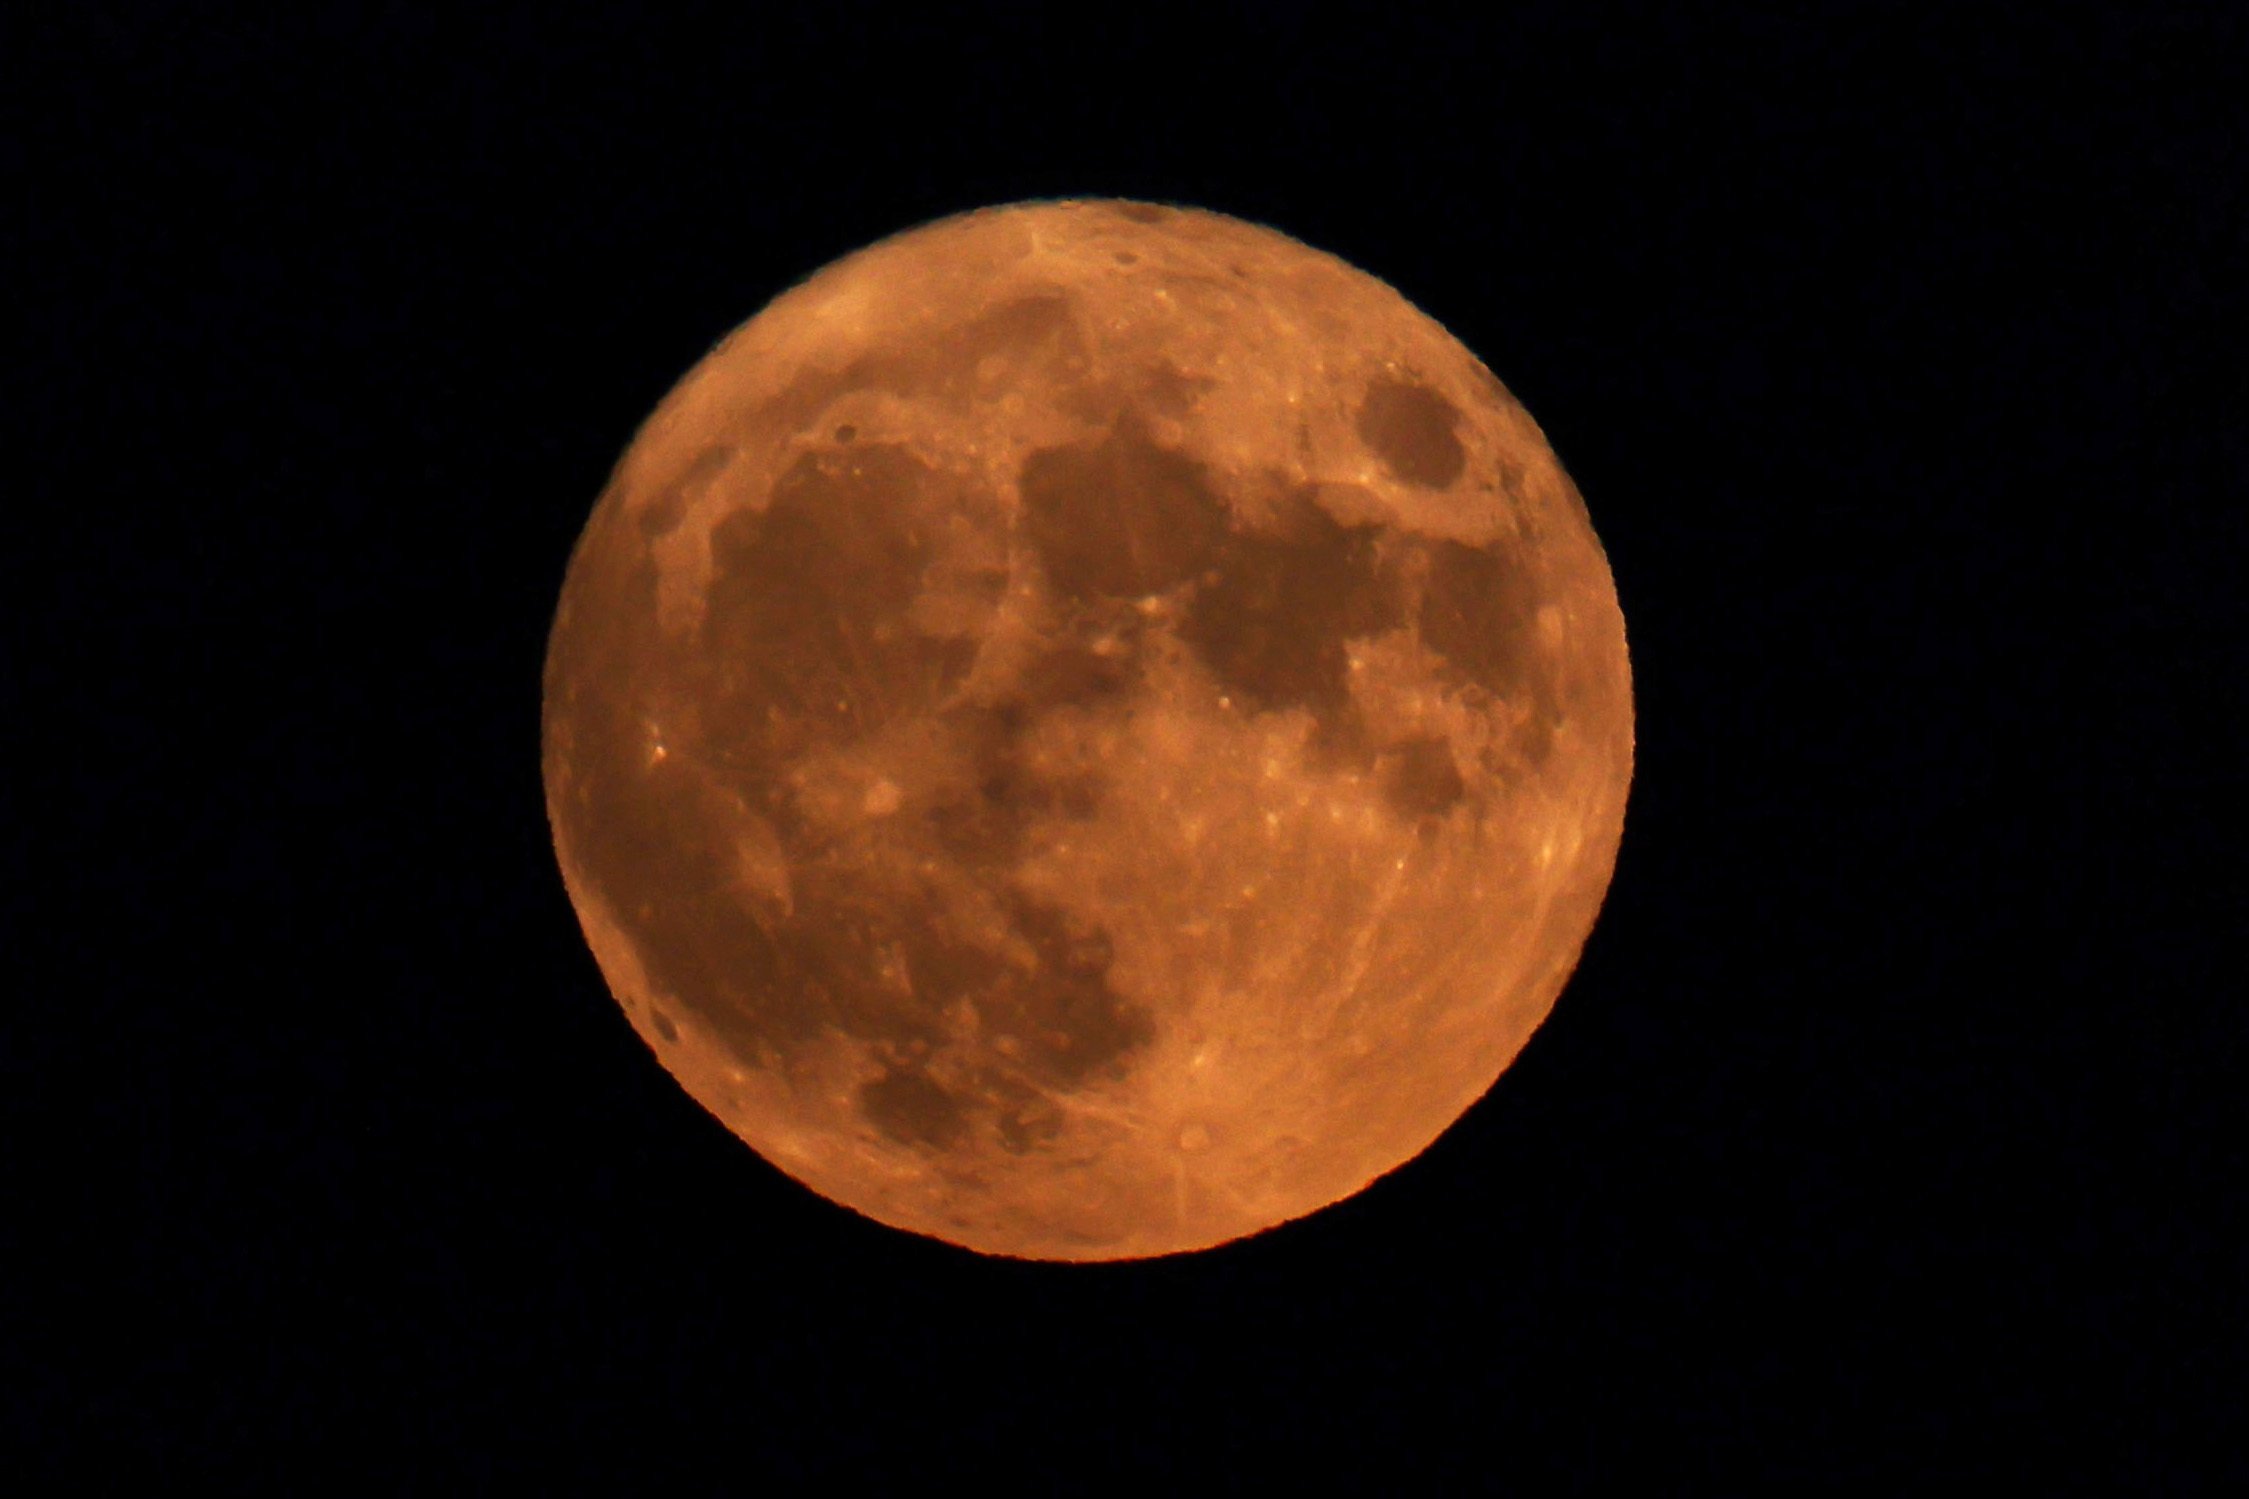 The Sturgeon Moon glows in the dark sky.